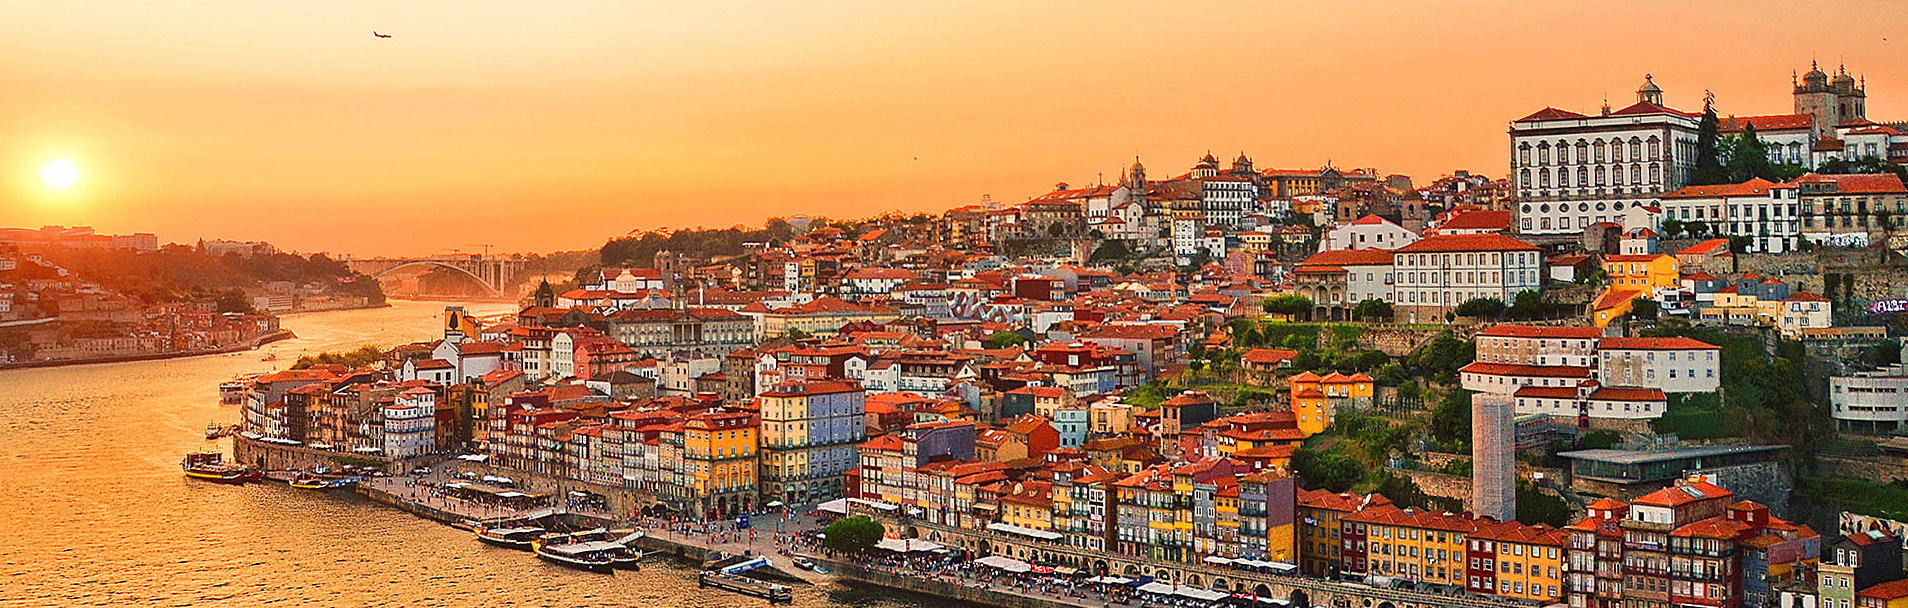 Portugal-Reiss-Reisen-Luxusreisen-Porto_Portugal